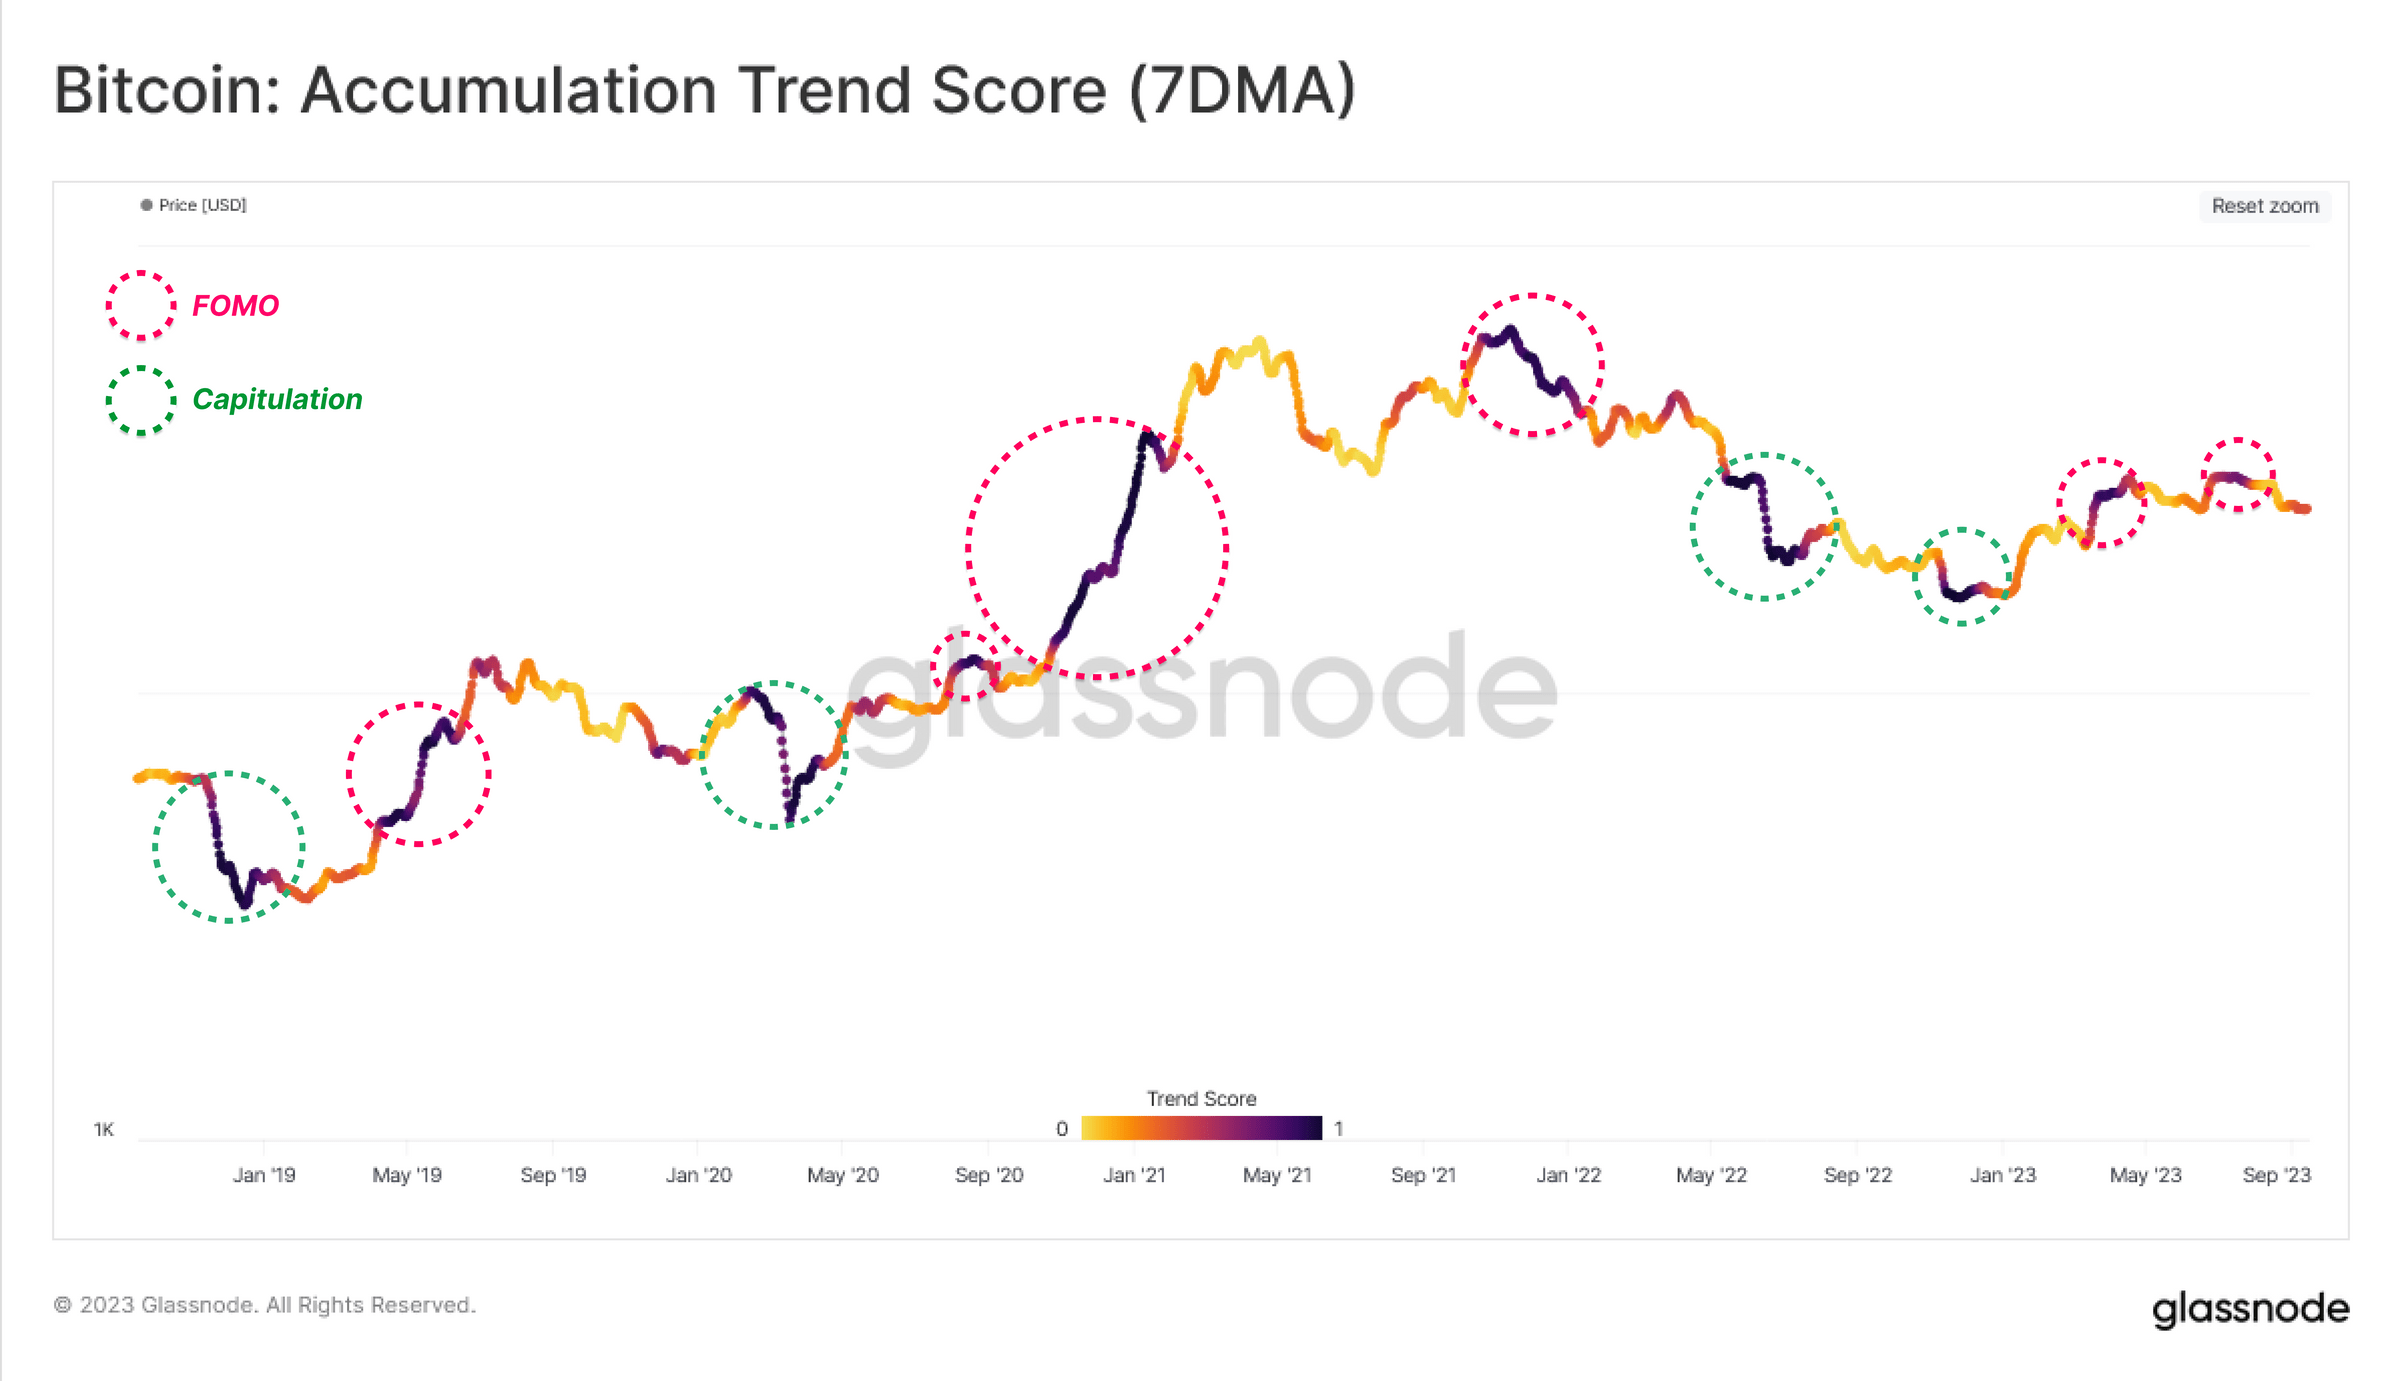 Bitcoin accumulation trend score